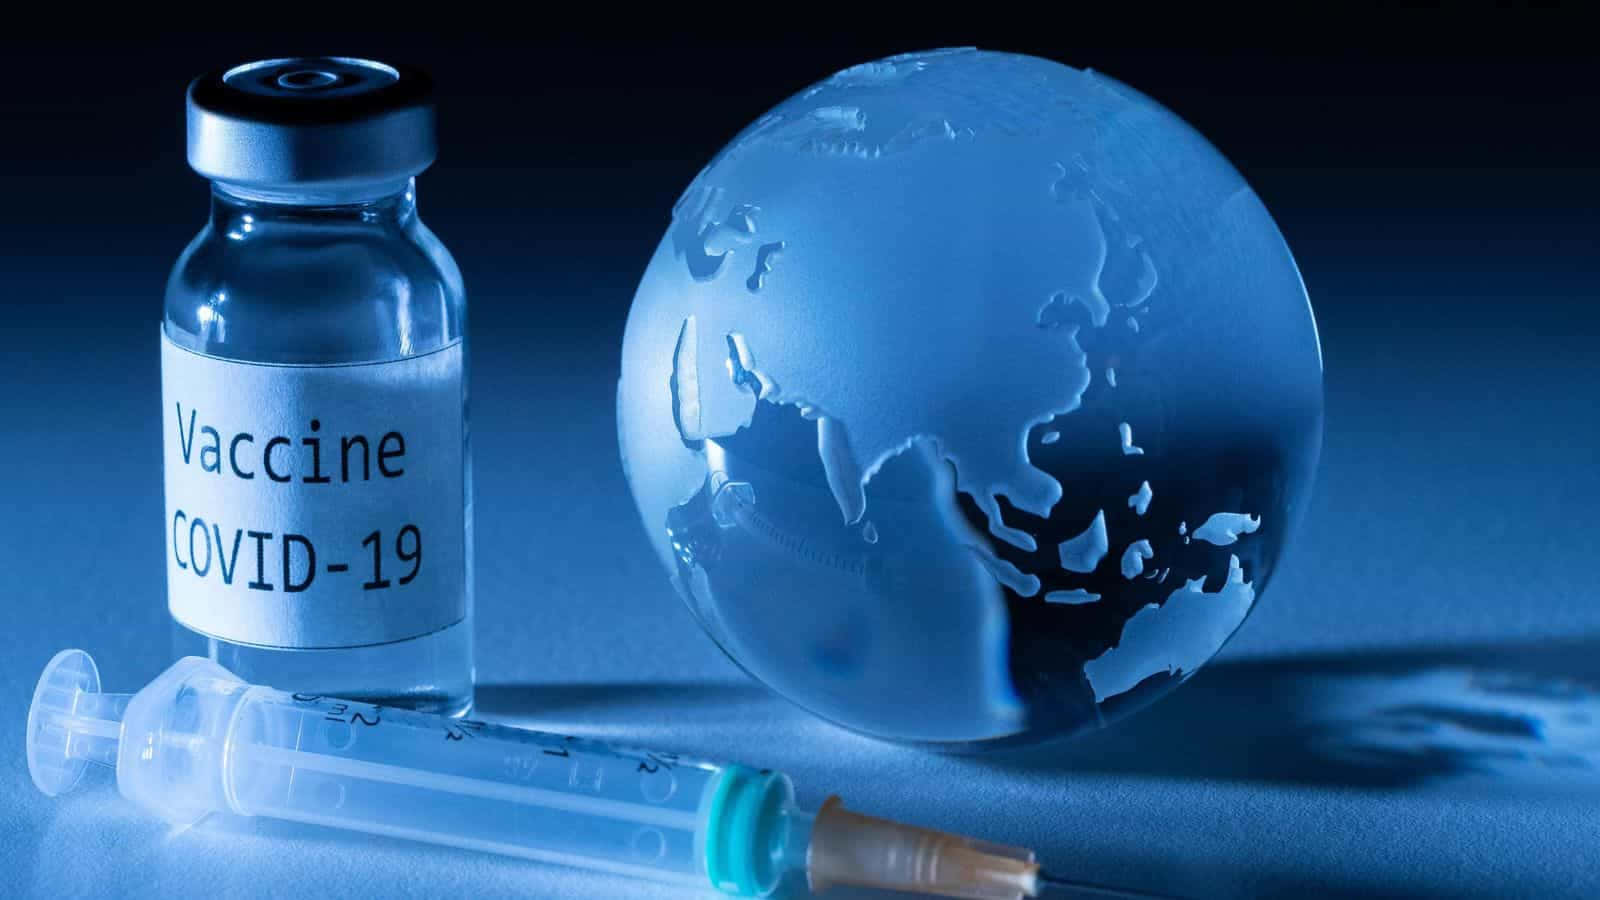 Covid-19 Vaccine Syringe And Earth Globe